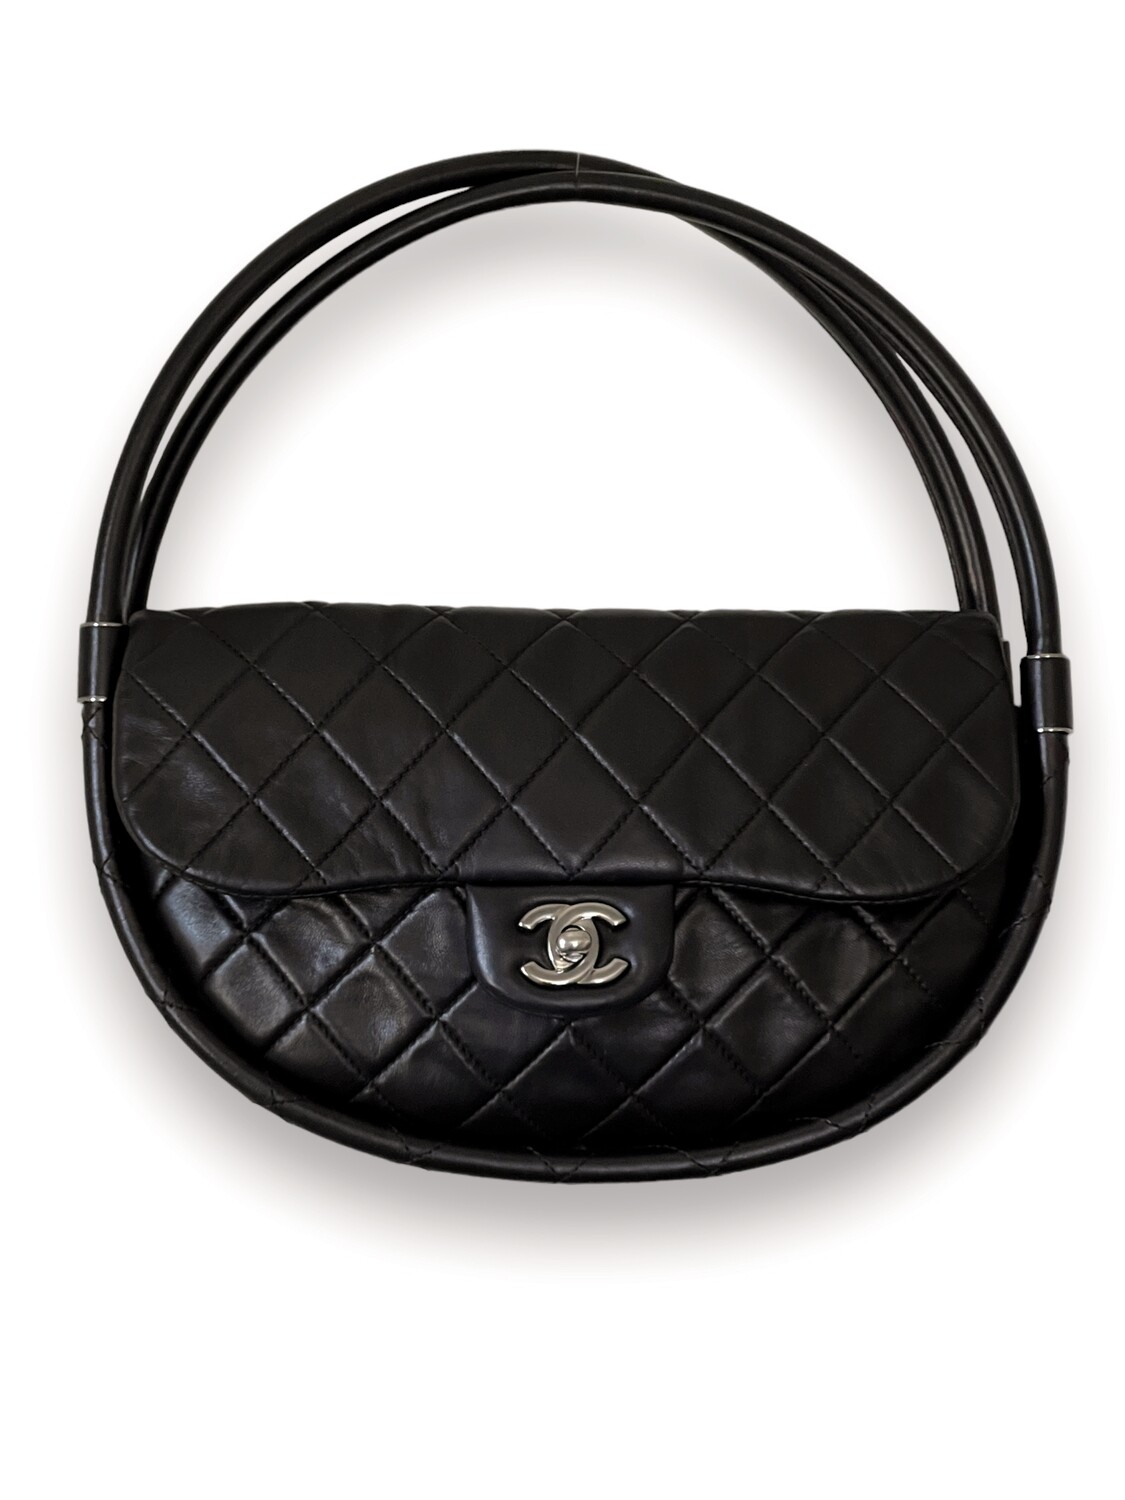 Chanel Hula Hoop Bag First Impression + What Fits // Medium Chanel Hula Hoop  in Black Lambskin 